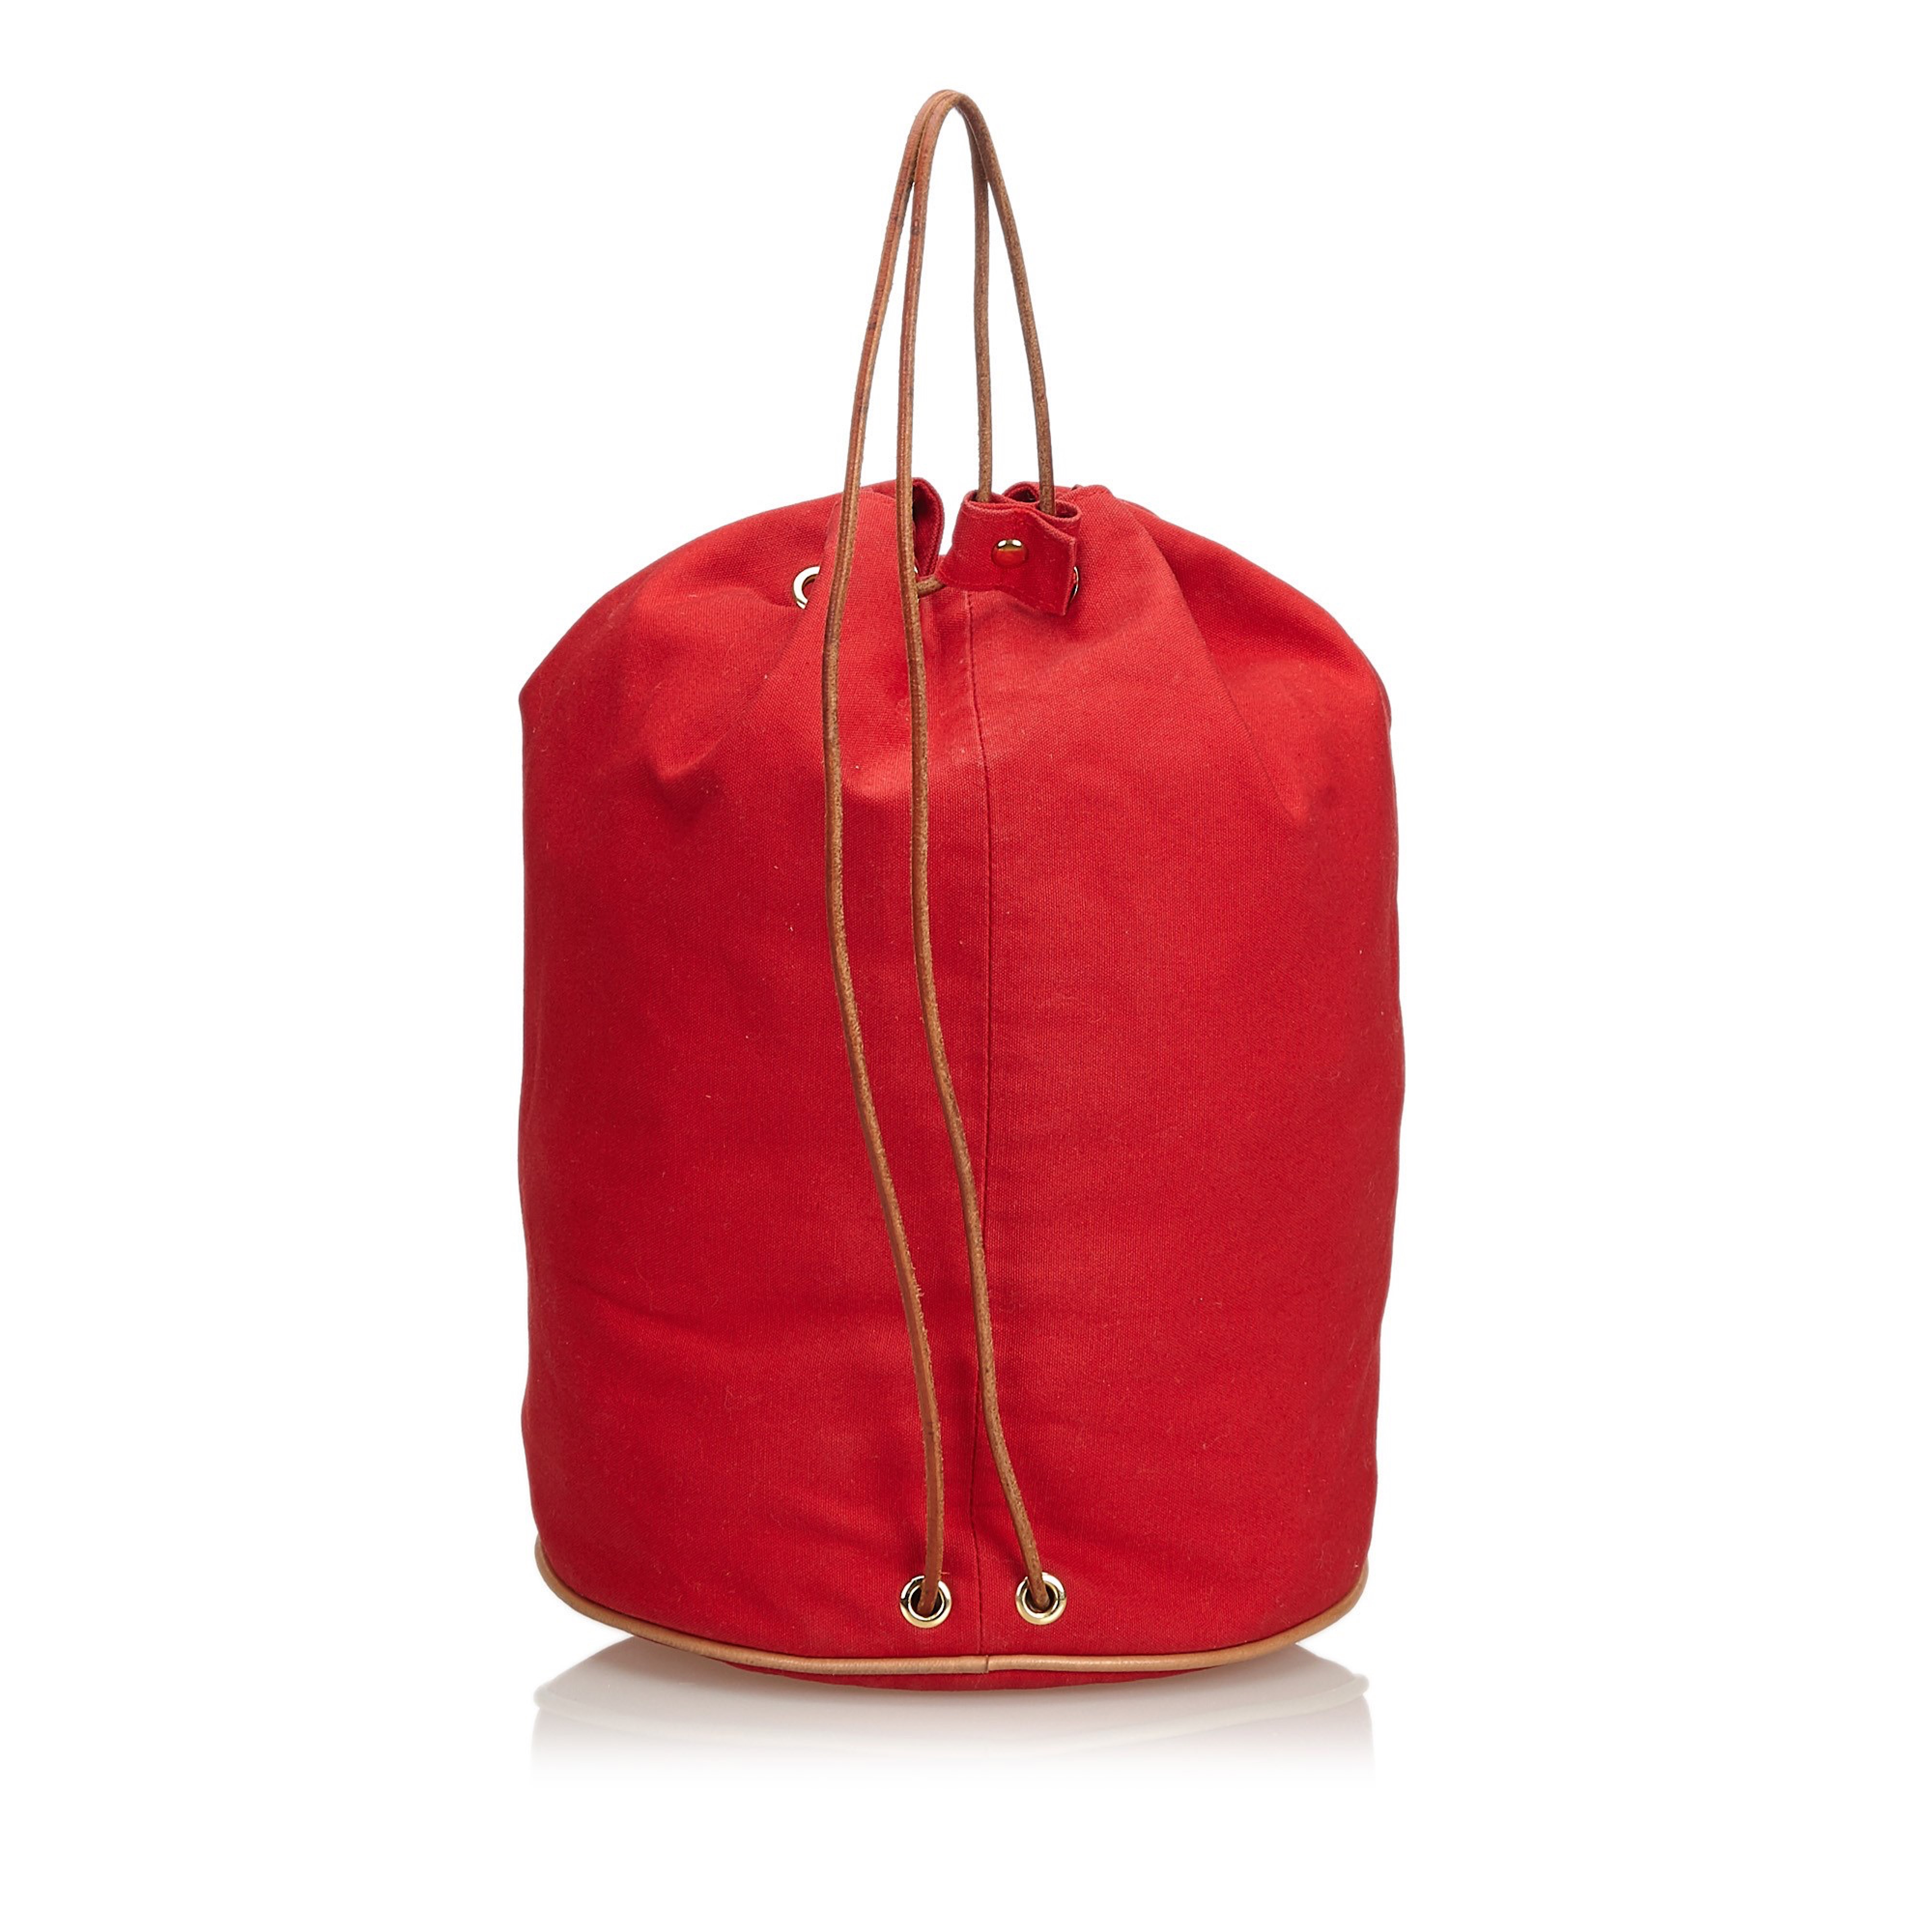 Hermès Polochon Mimile Duffel Bag - Image 3 of 7